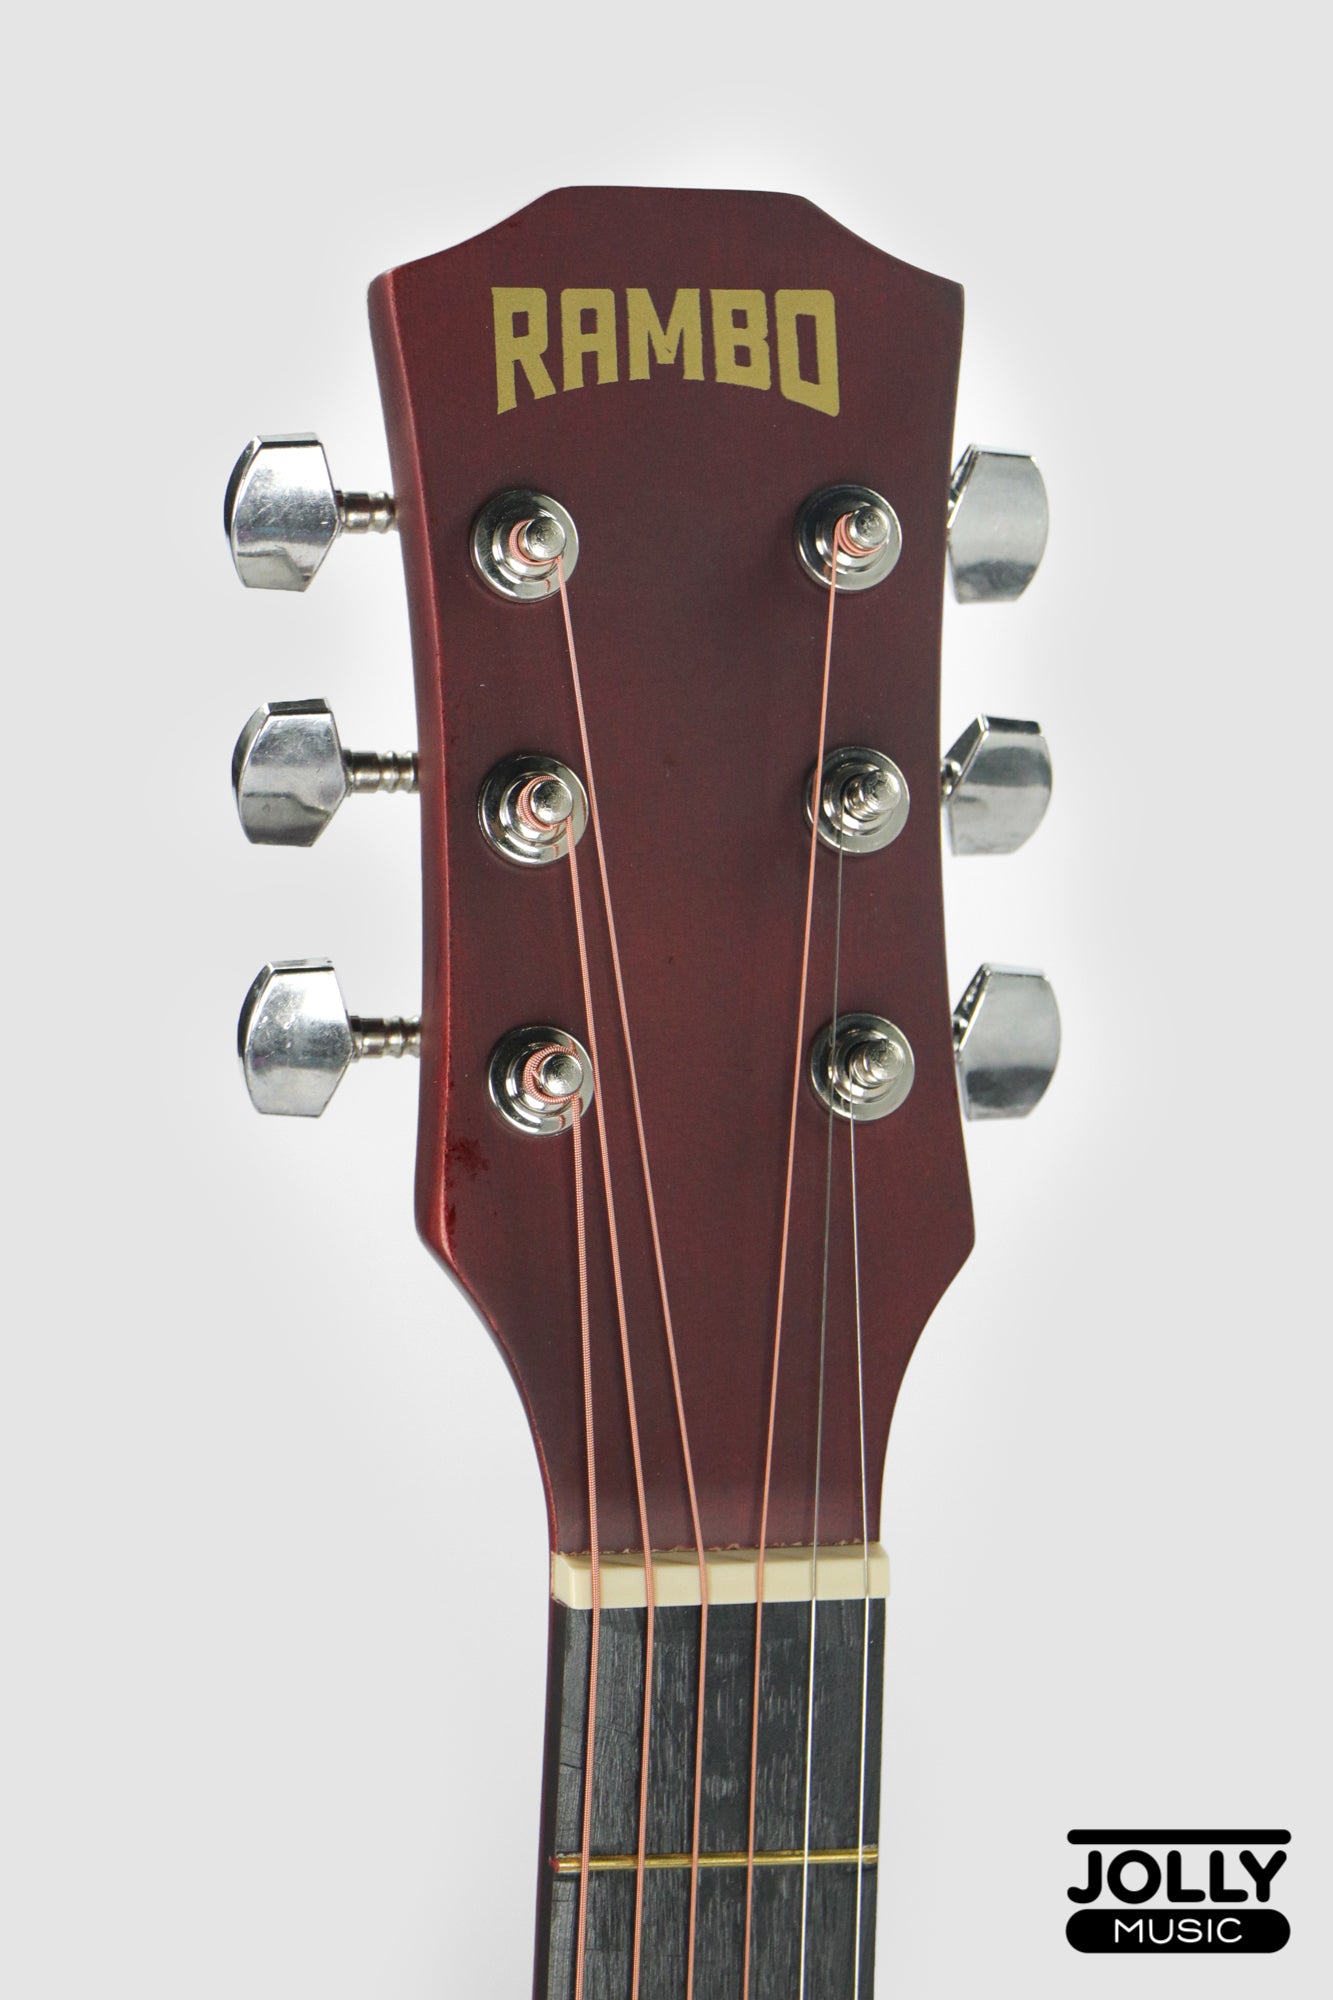 Rambo 41" Guitar K-41Y Truss Rod w/ Case, 3 Picks, Tuner, Capo - Natural